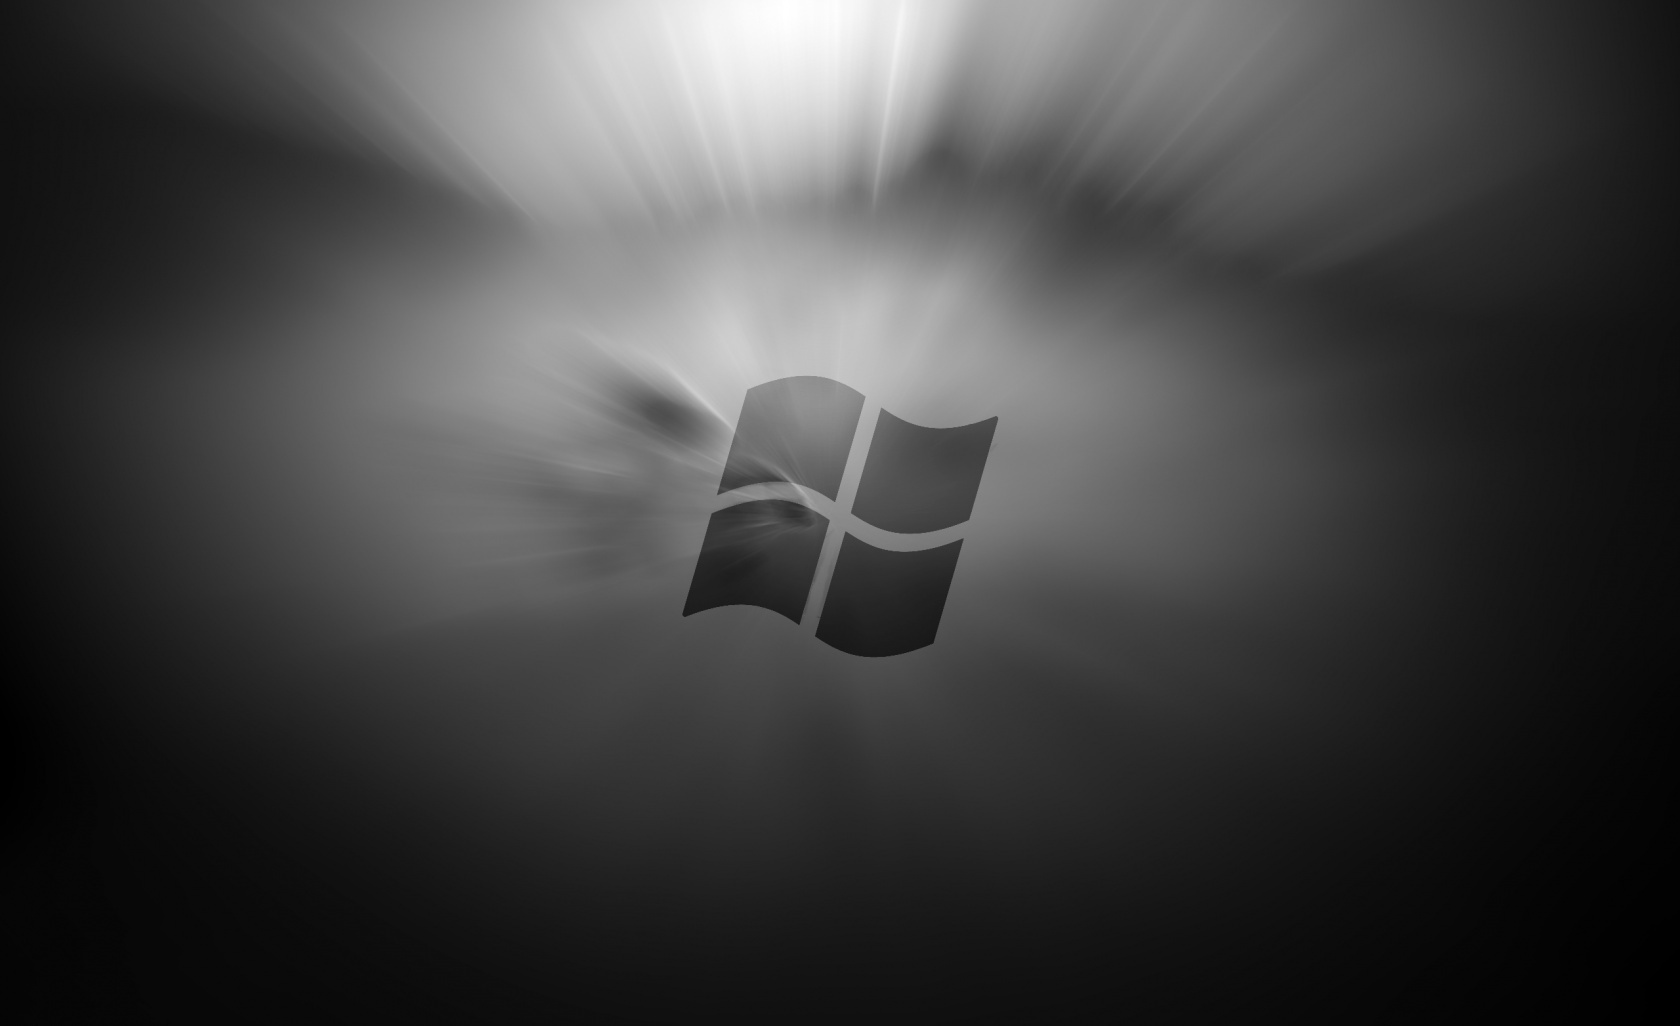  47 Windows 10 Dark  Wallpaper  on WallpaperSafari